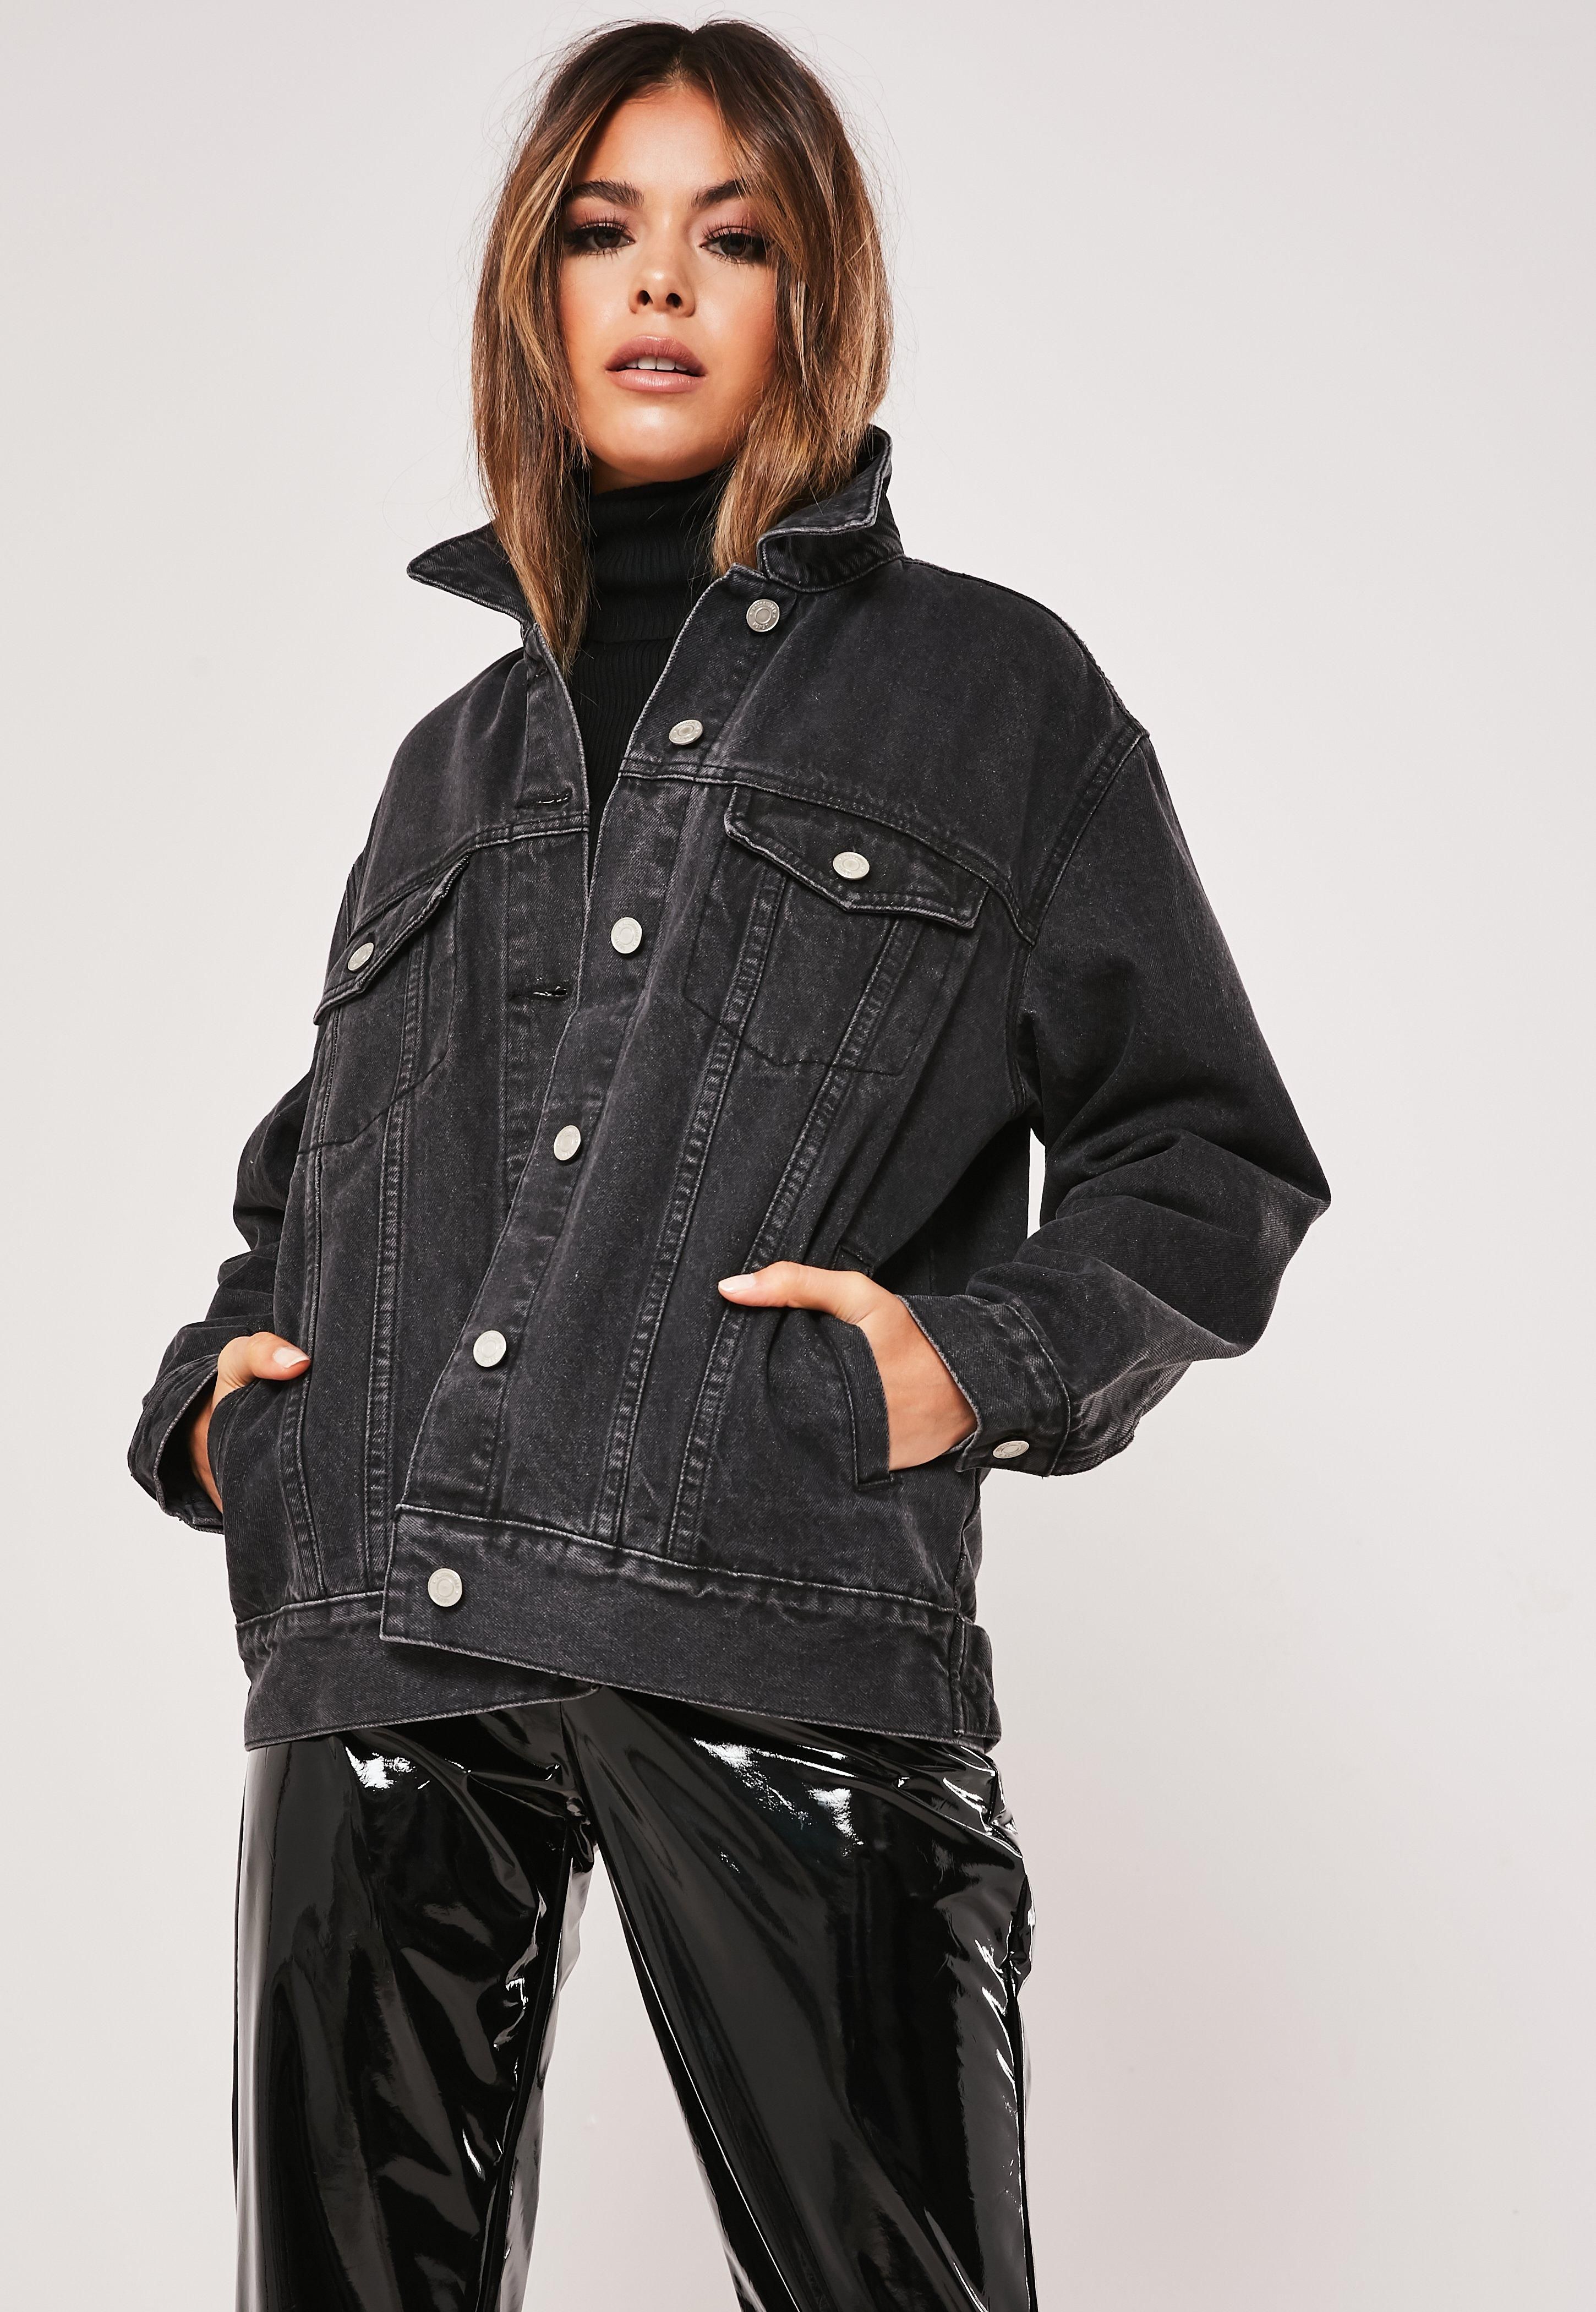 Transaktion Umgebung Getränk black denim jacket with blue jeans female ...